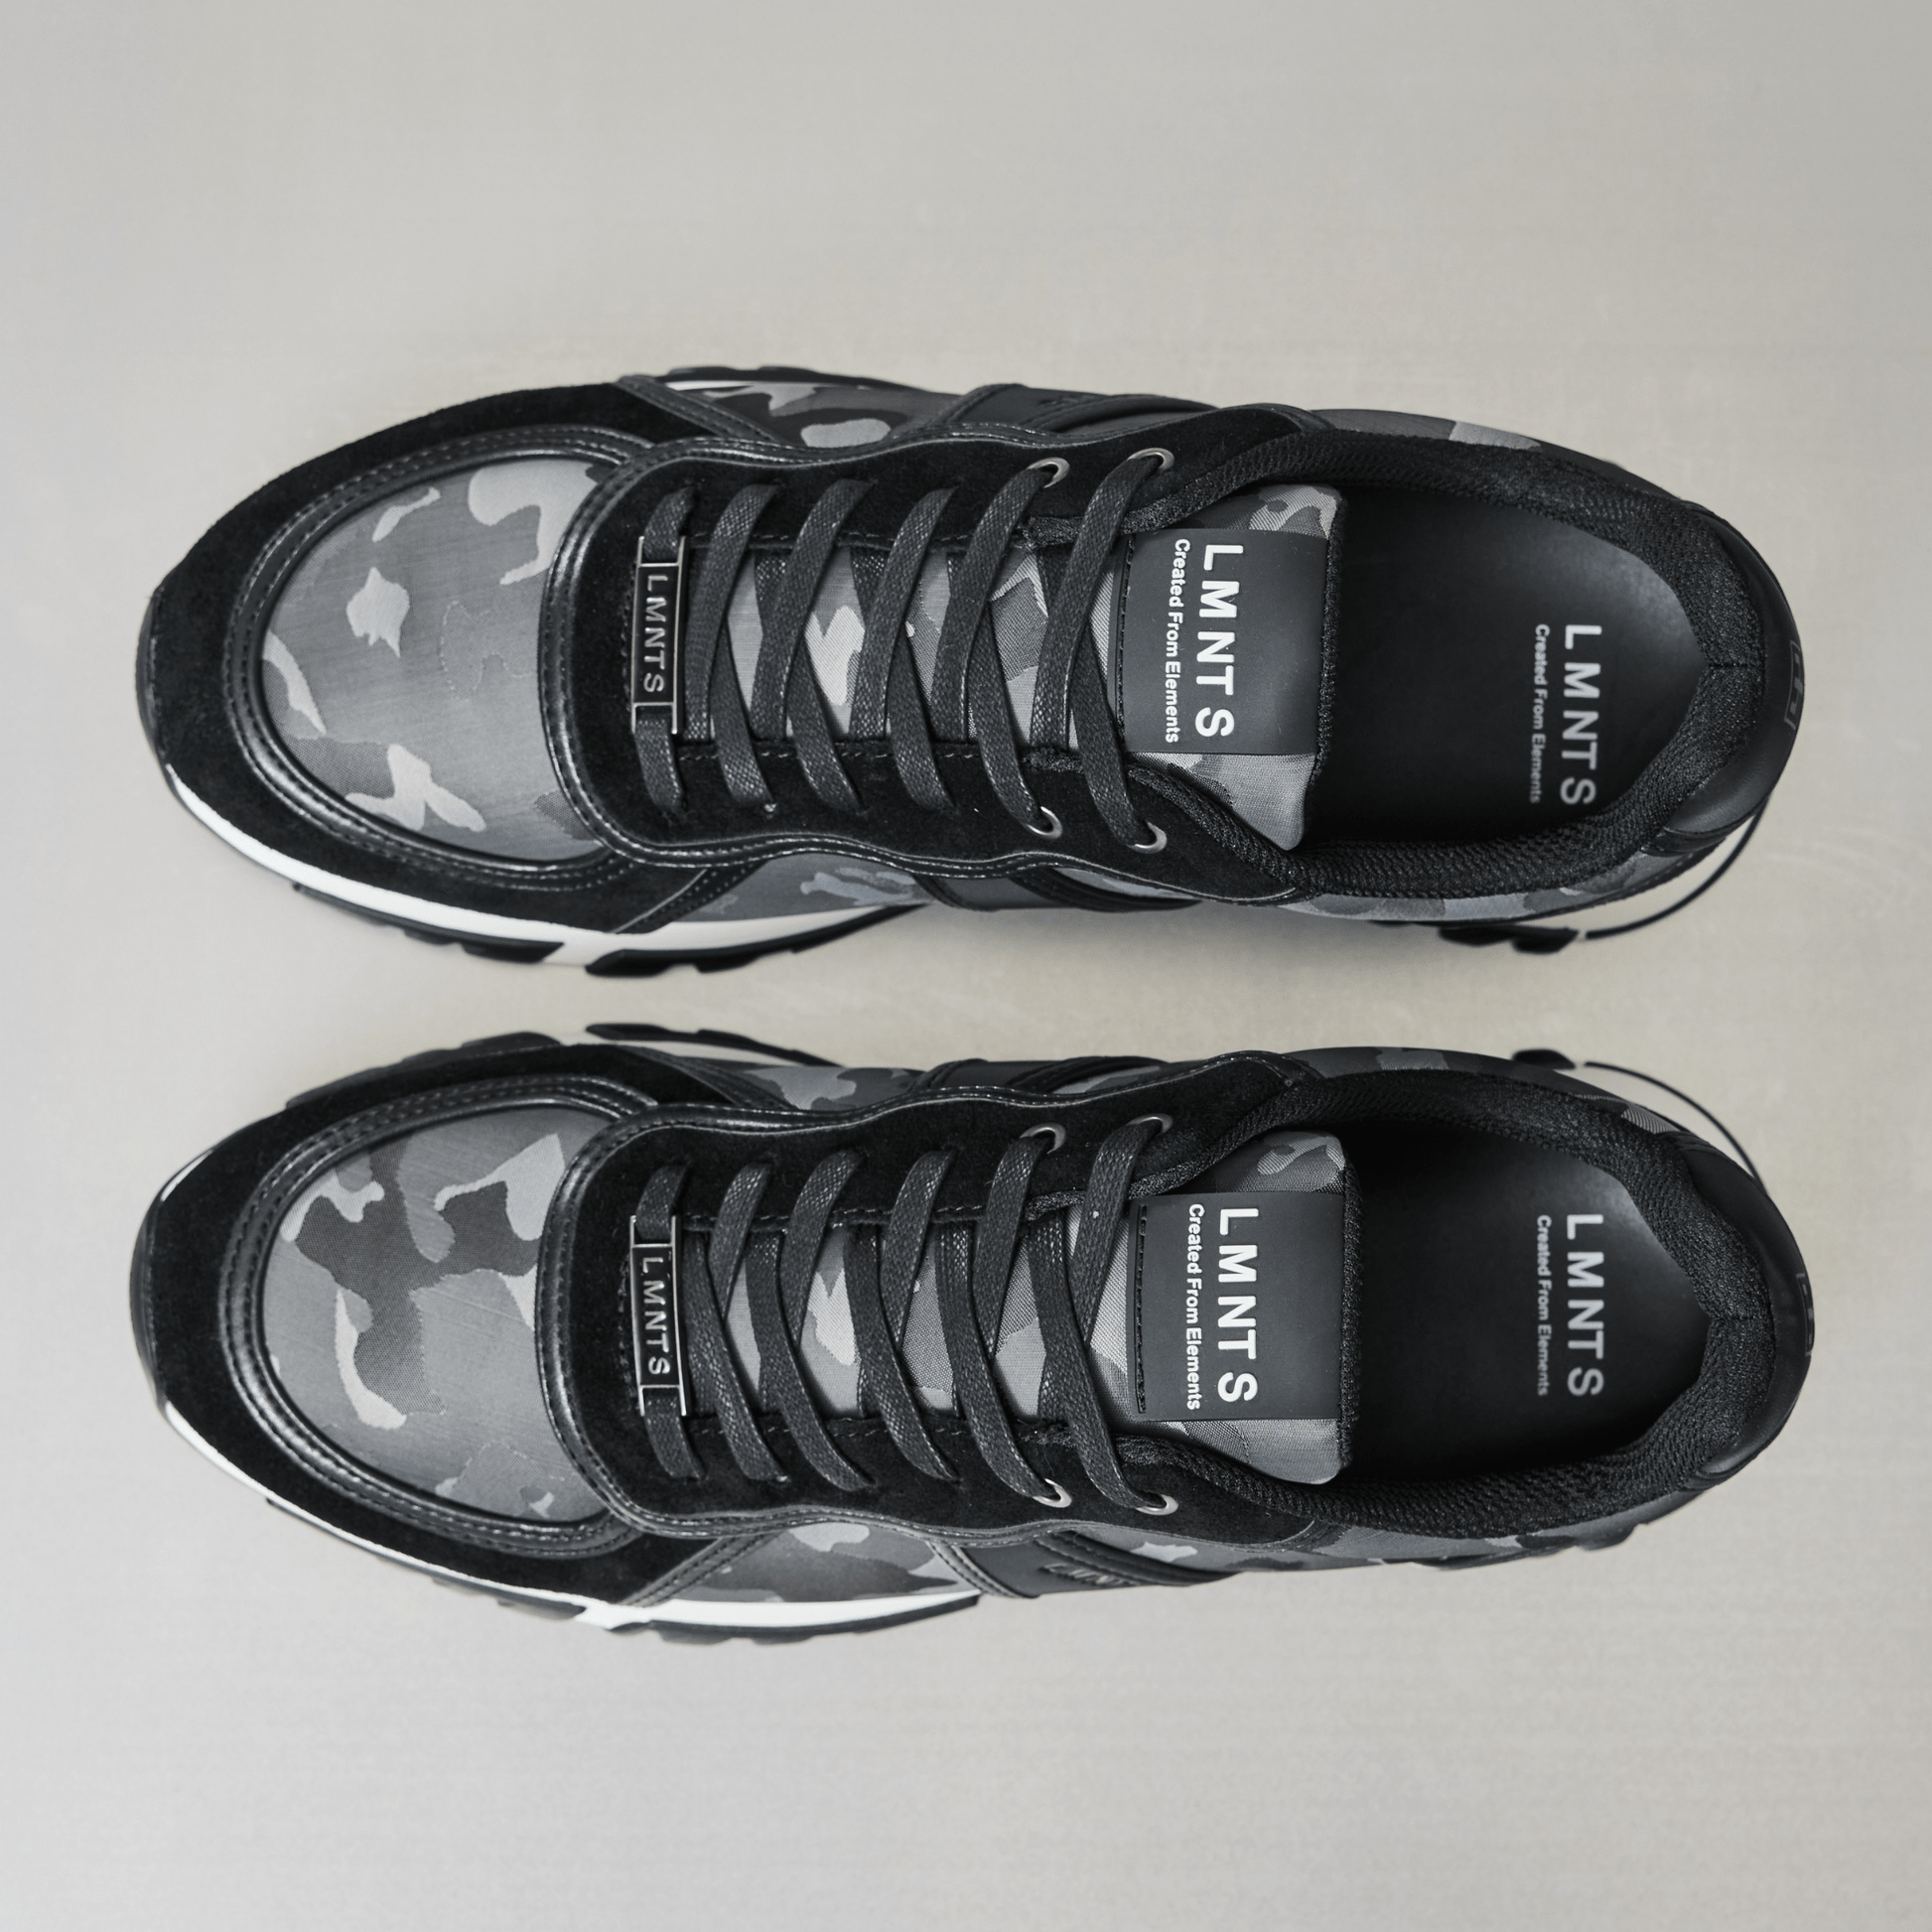 LMNTS Footwear Delta Camo - Black / White